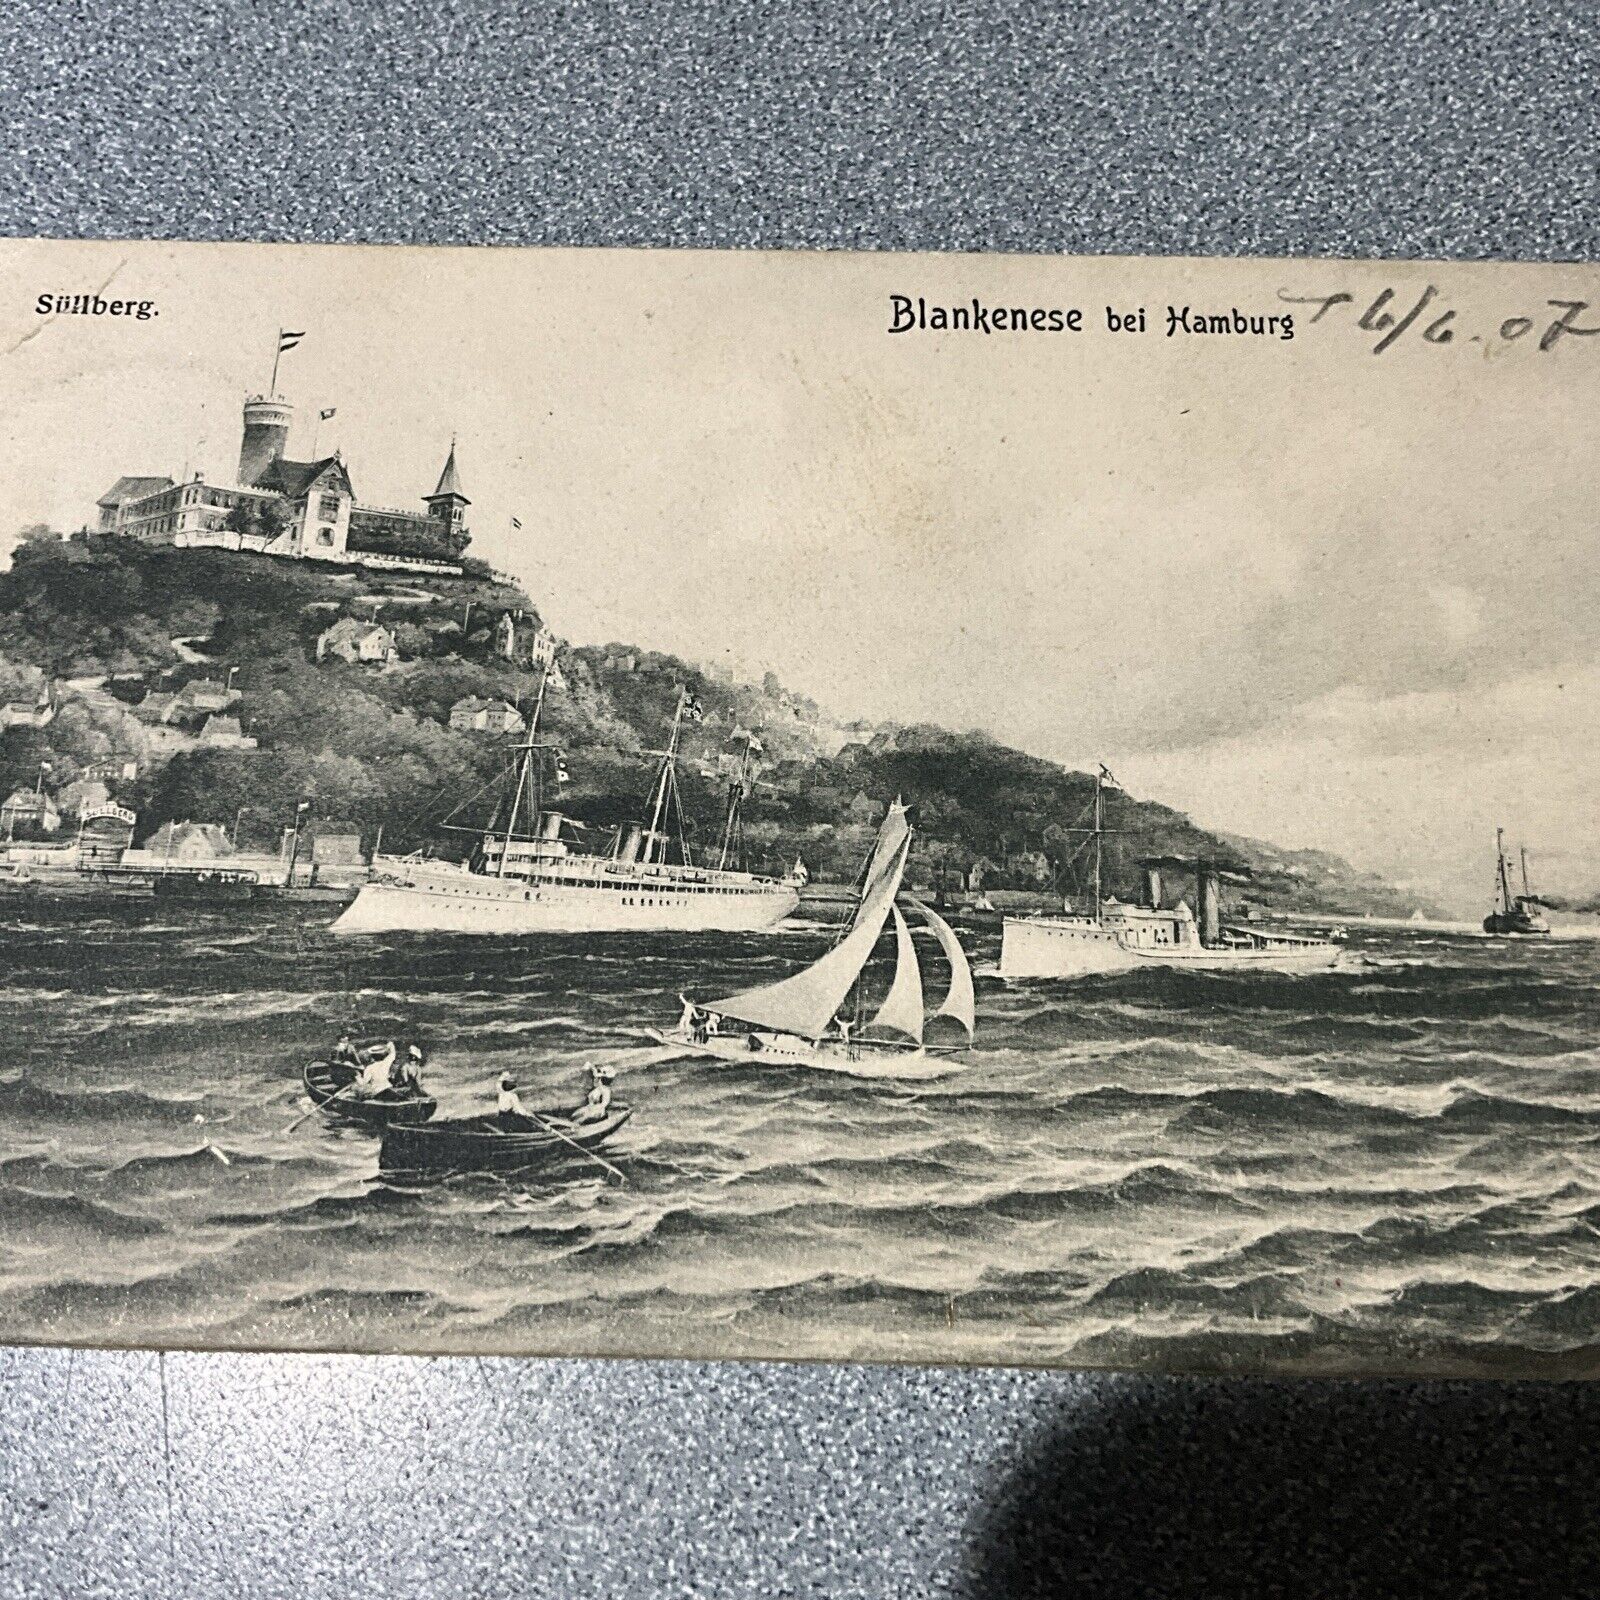 Süllberg castle and  Blankenese bei Hamburg Germany Postcard 1907  posted